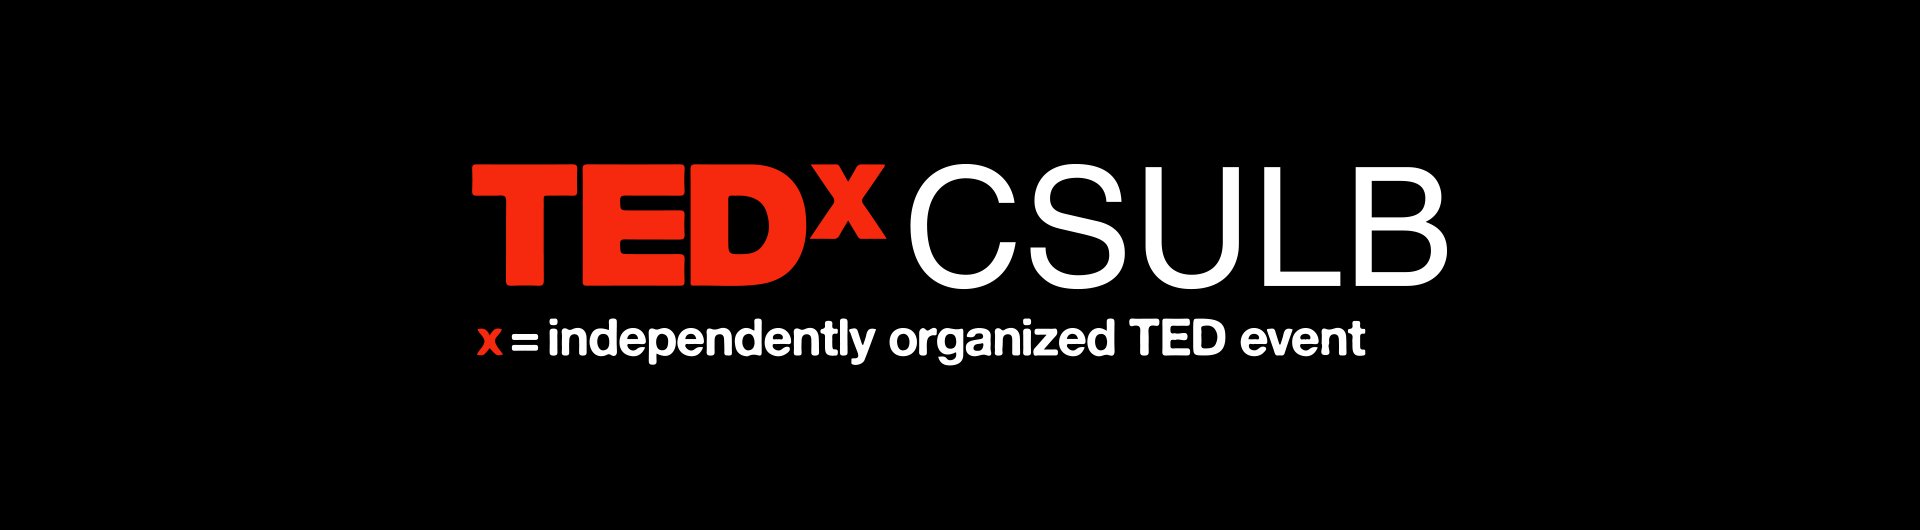 Master Calendar Event Details TEDx CSULB 2022 SETUP